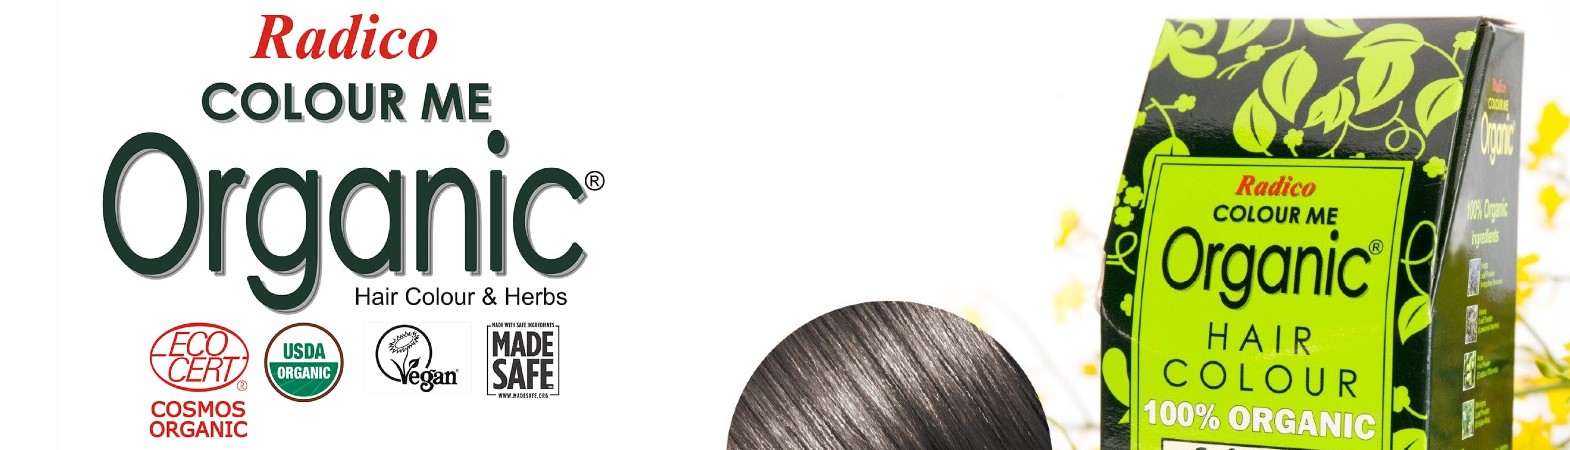 Radico Certified Organic Hair Color